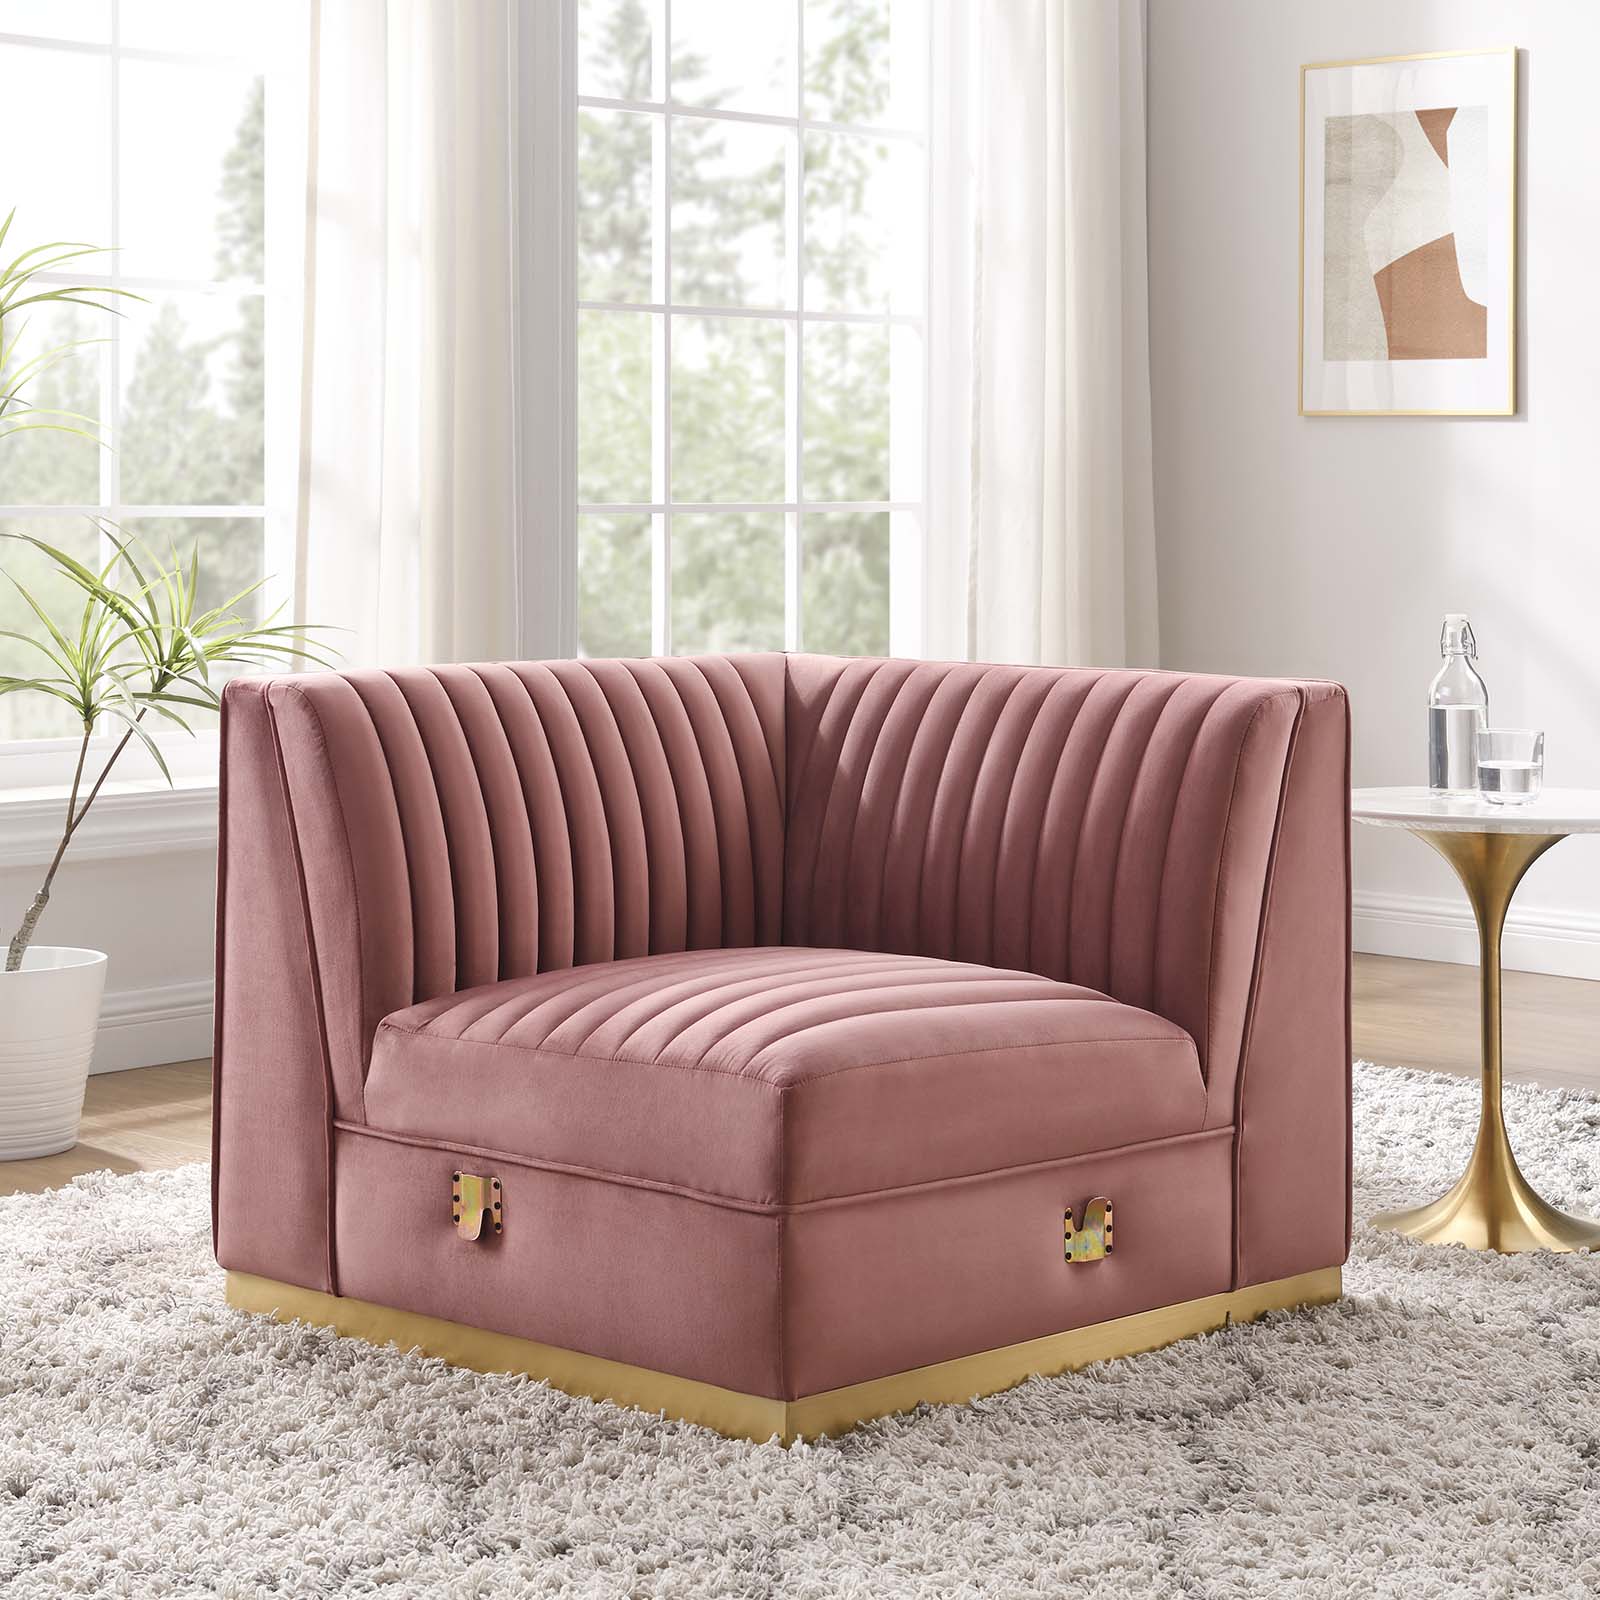 Sanguine Channel Tufted Performance Velvet Modular Sectional Sofa Left Corner Chair-Corner Chair-Modway-Wall2Wall Furnishings